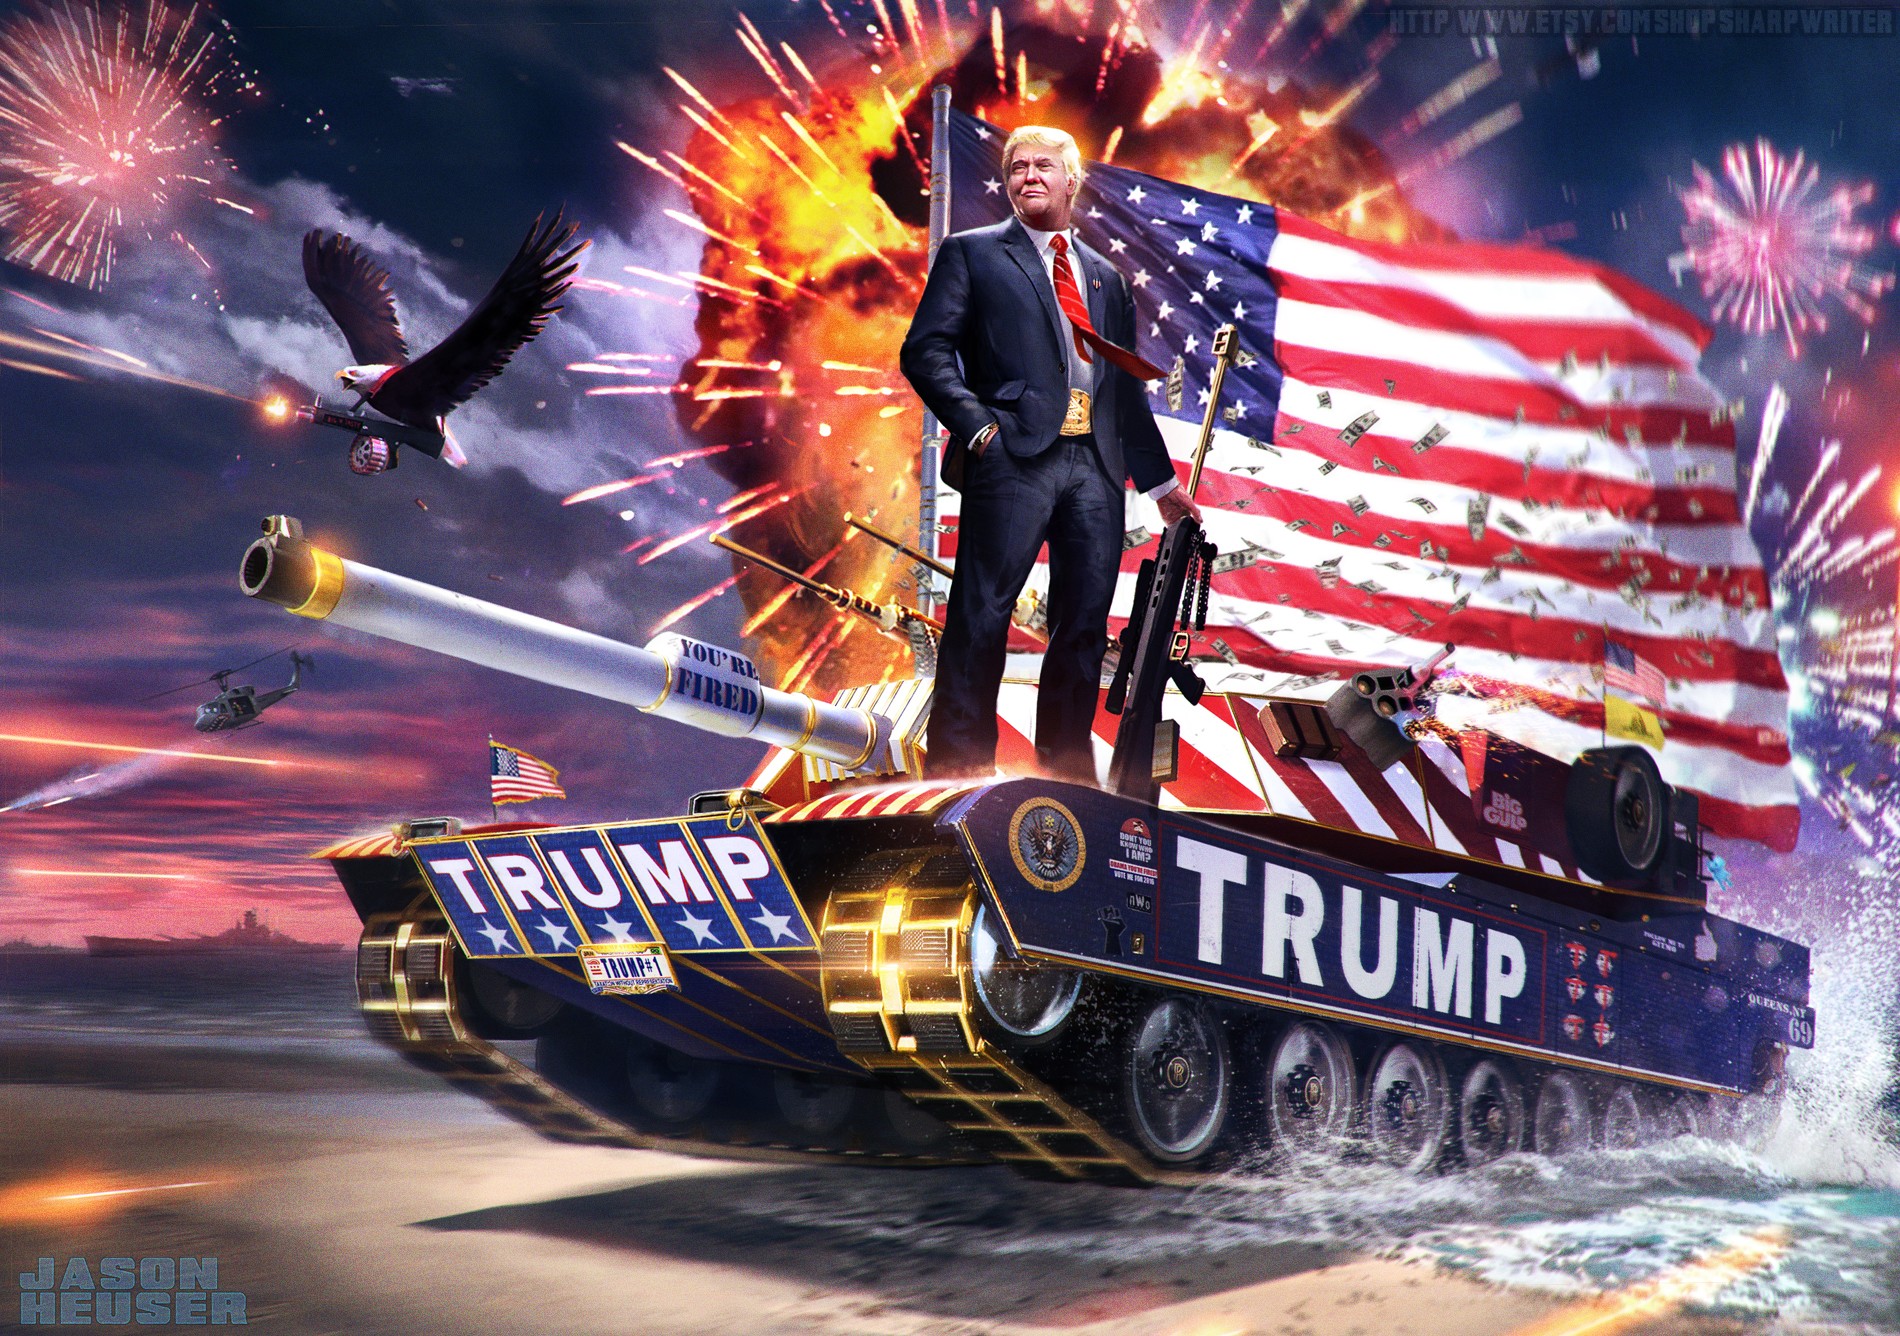 People 1900x1336 Donald Trump MAGA politics American flag USA fireworks military vehicle tank explosion humor presidents red tie U.S propaganda men